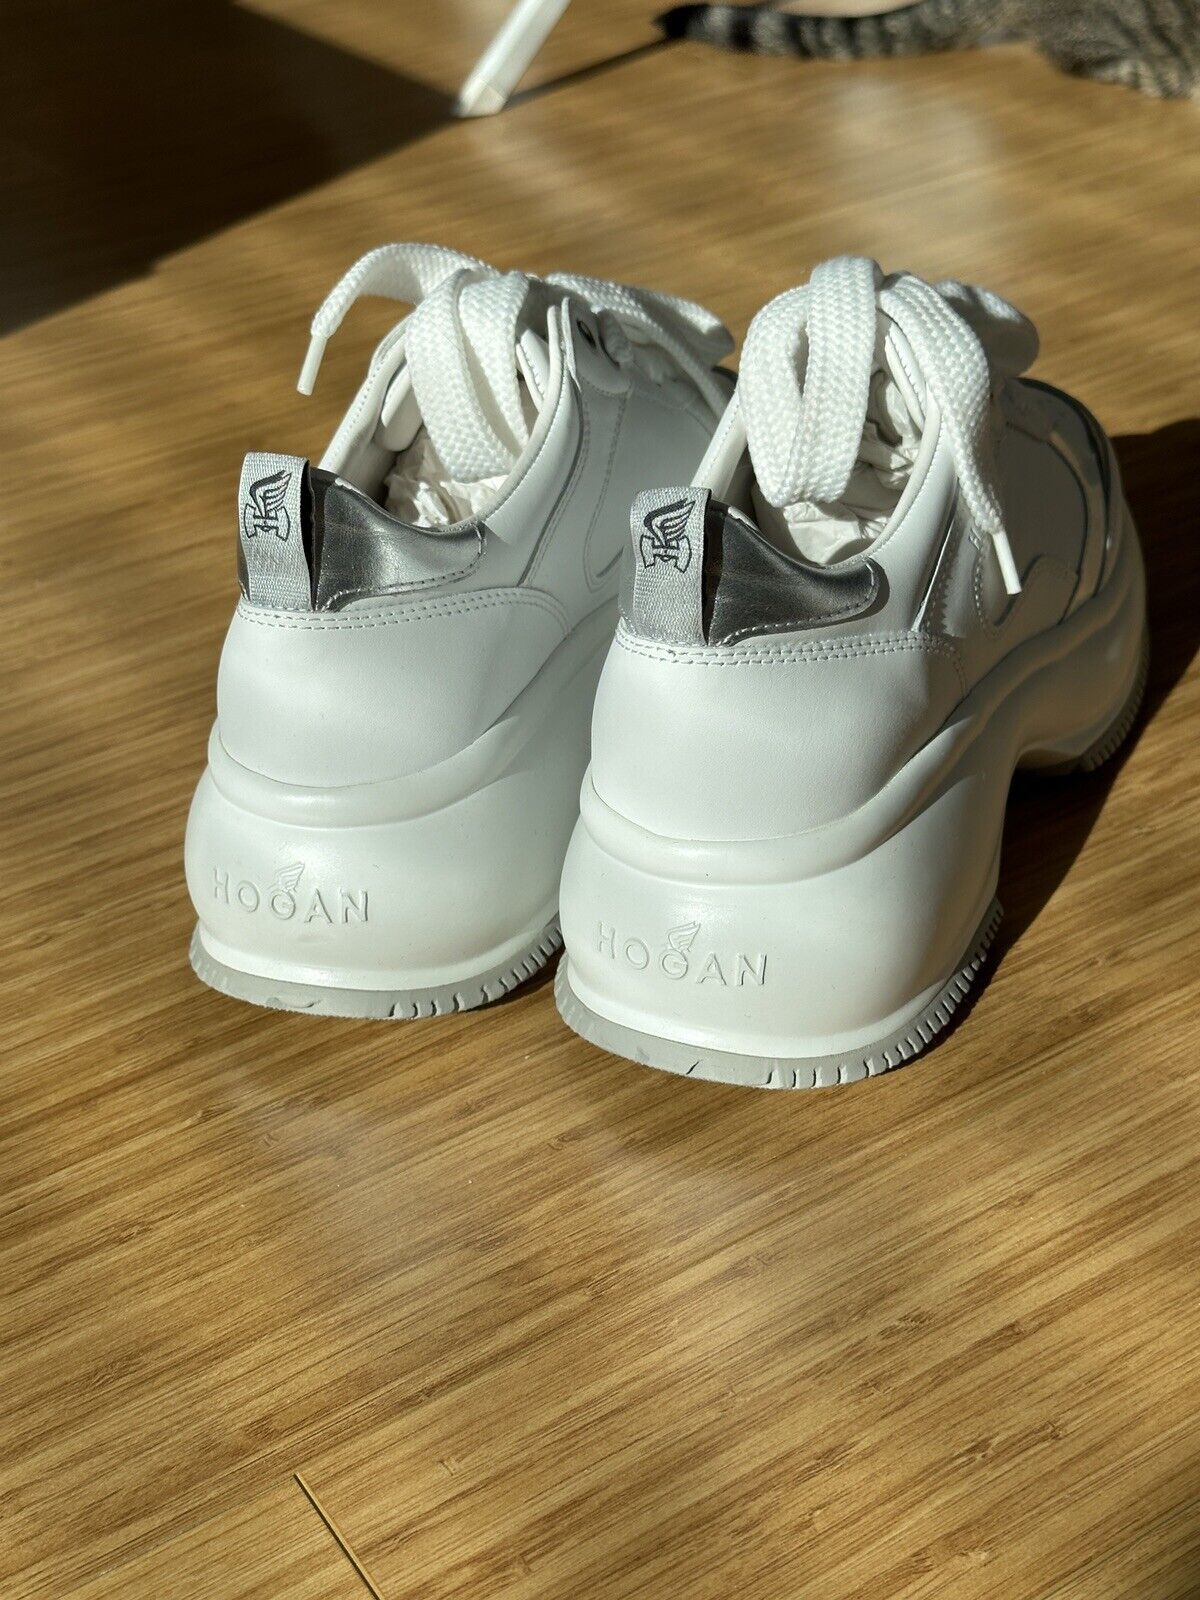 Hogan Women's Maxi Active Platform Sneakers White Leather